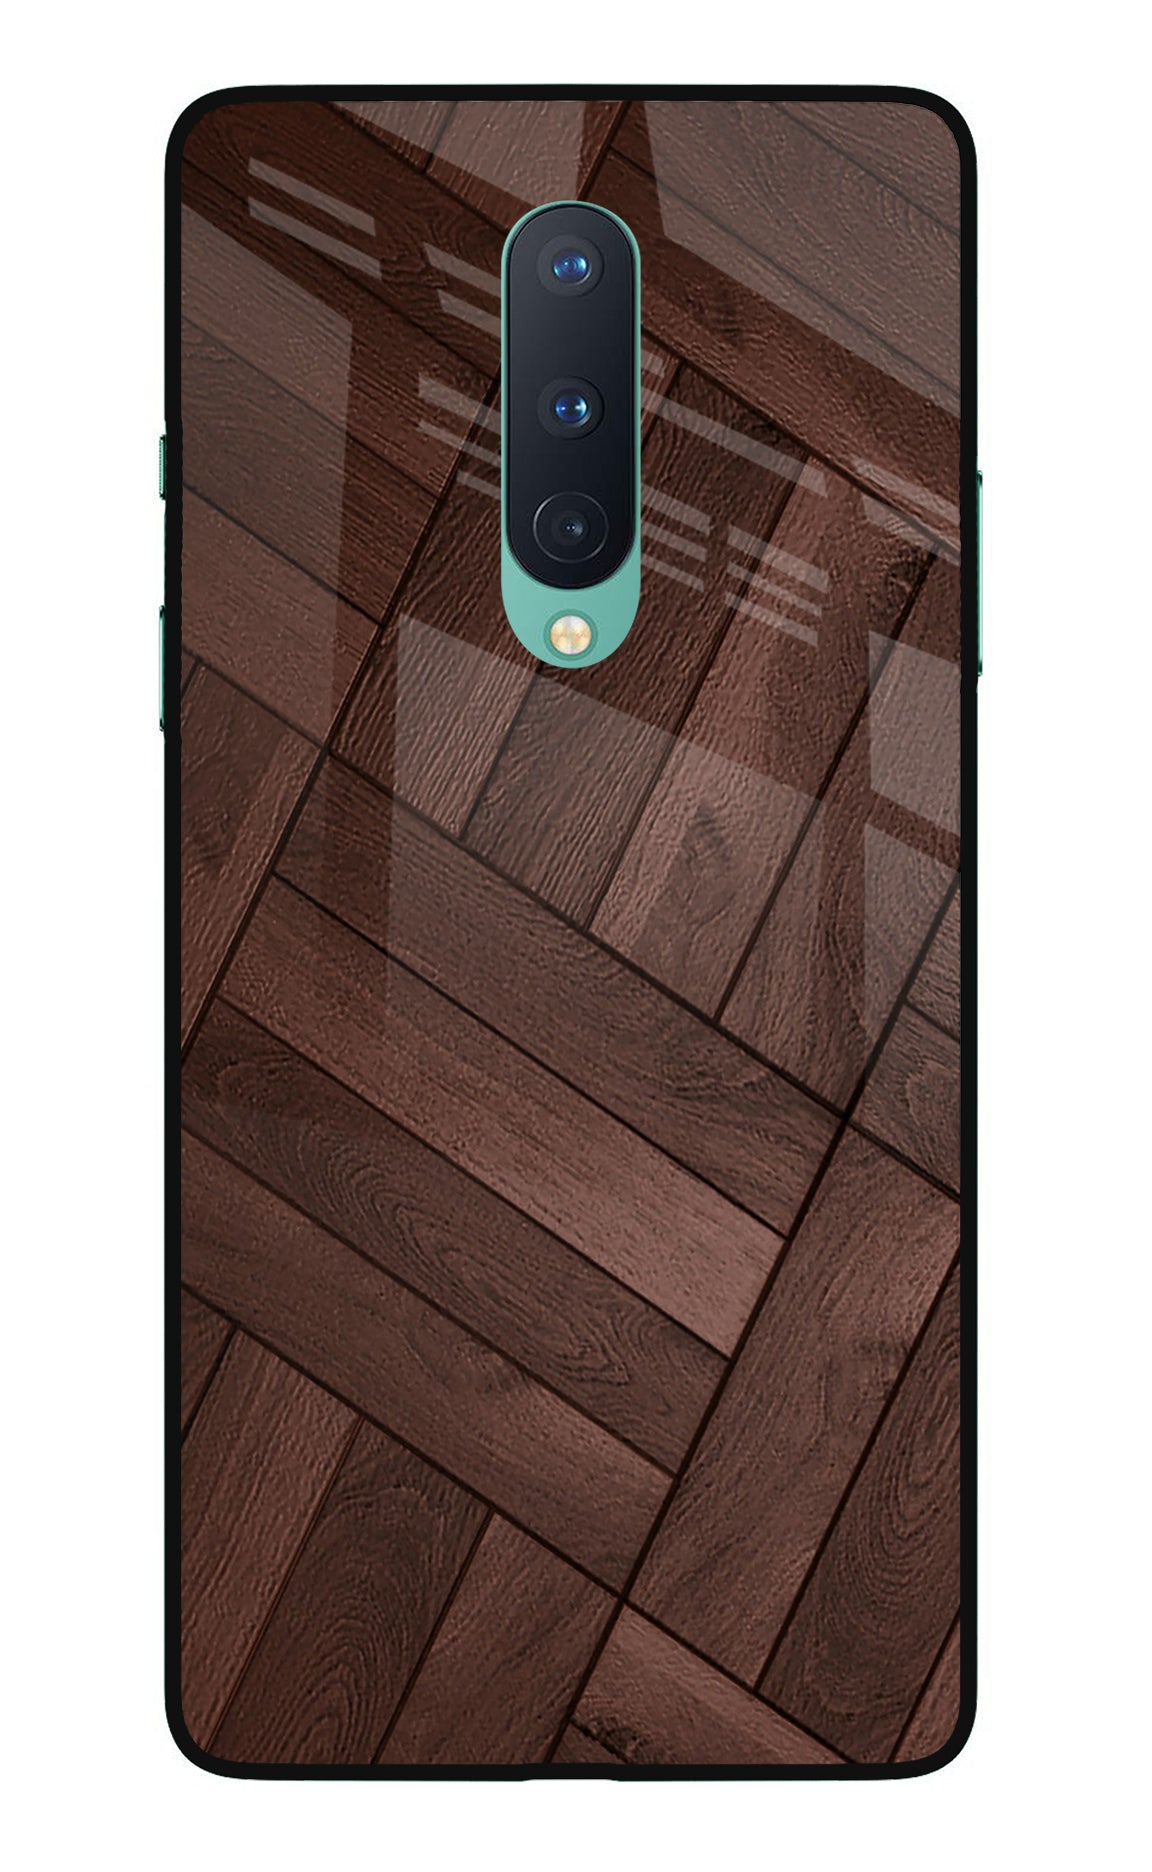 Wooden Texture Design Oneplus 8 Glass Case